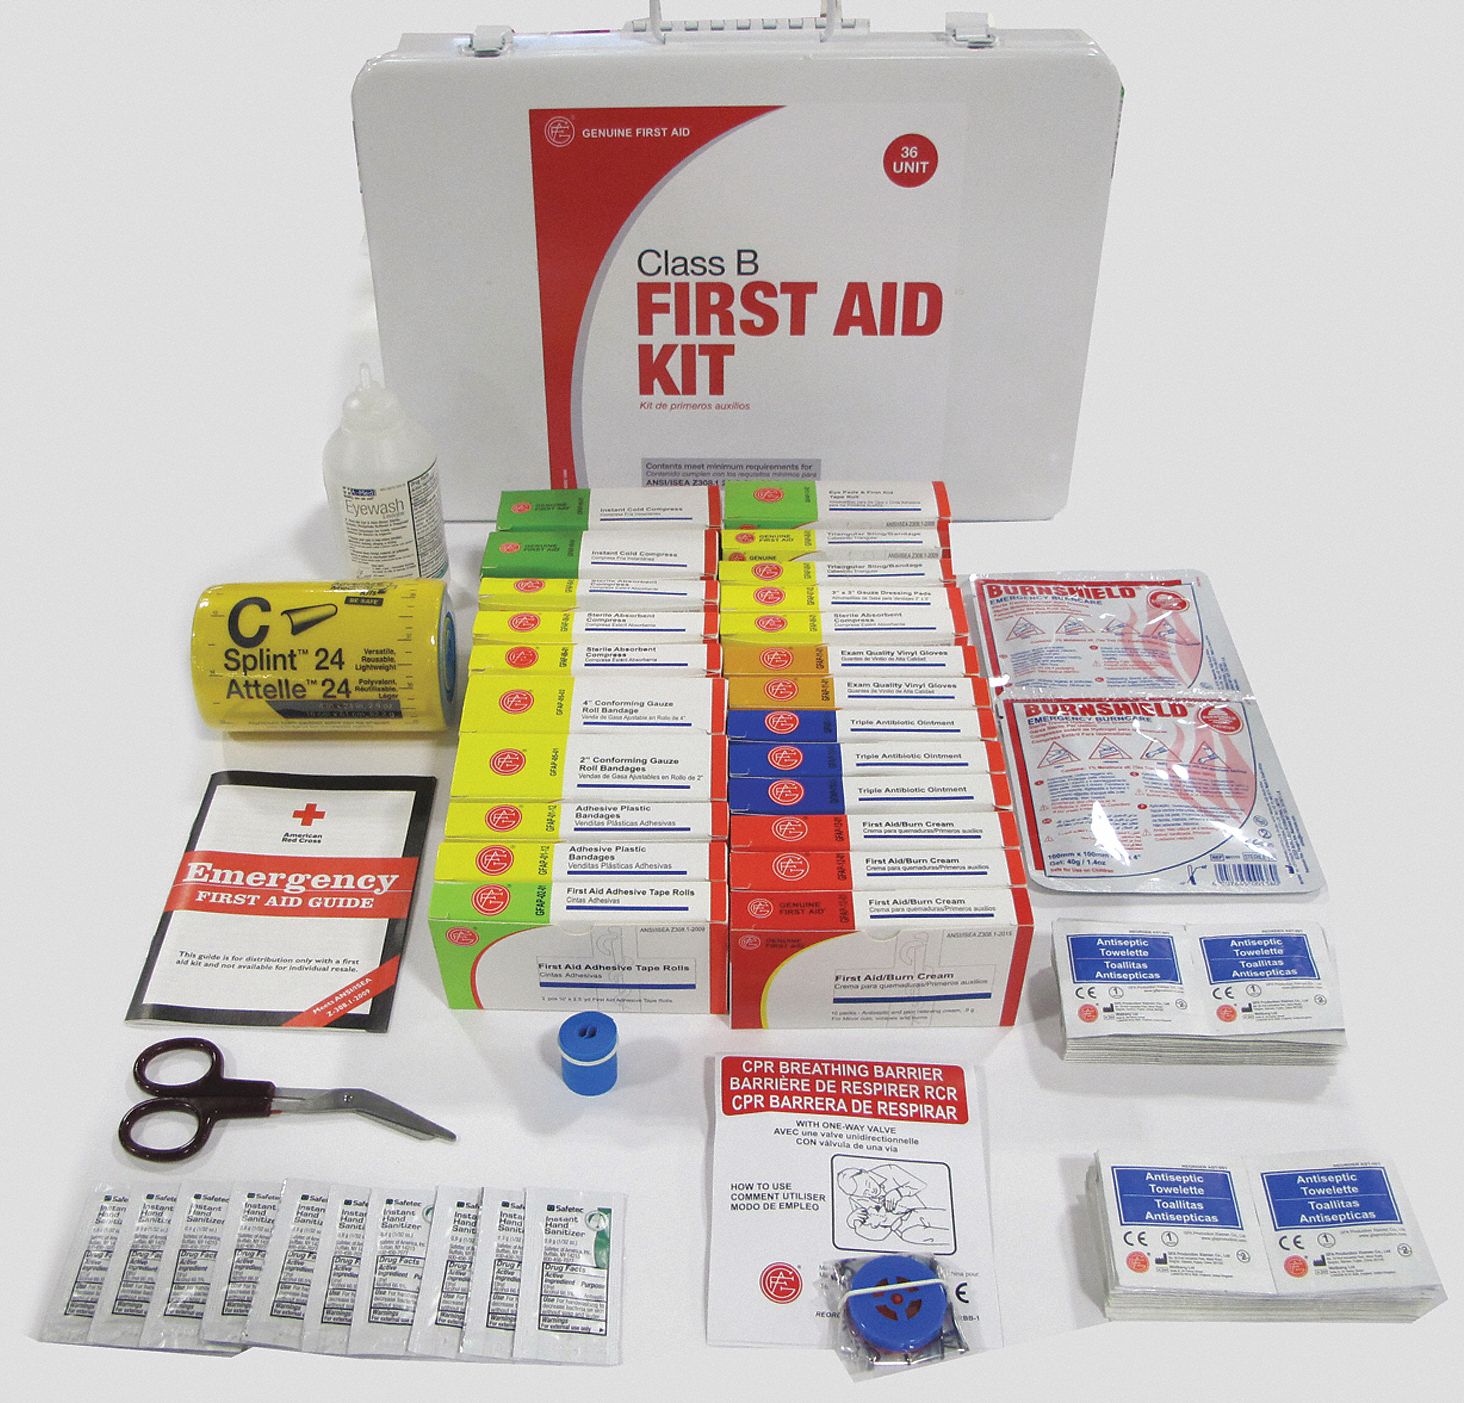 GRAINGER APPROVED First Aid Kit, Kit 